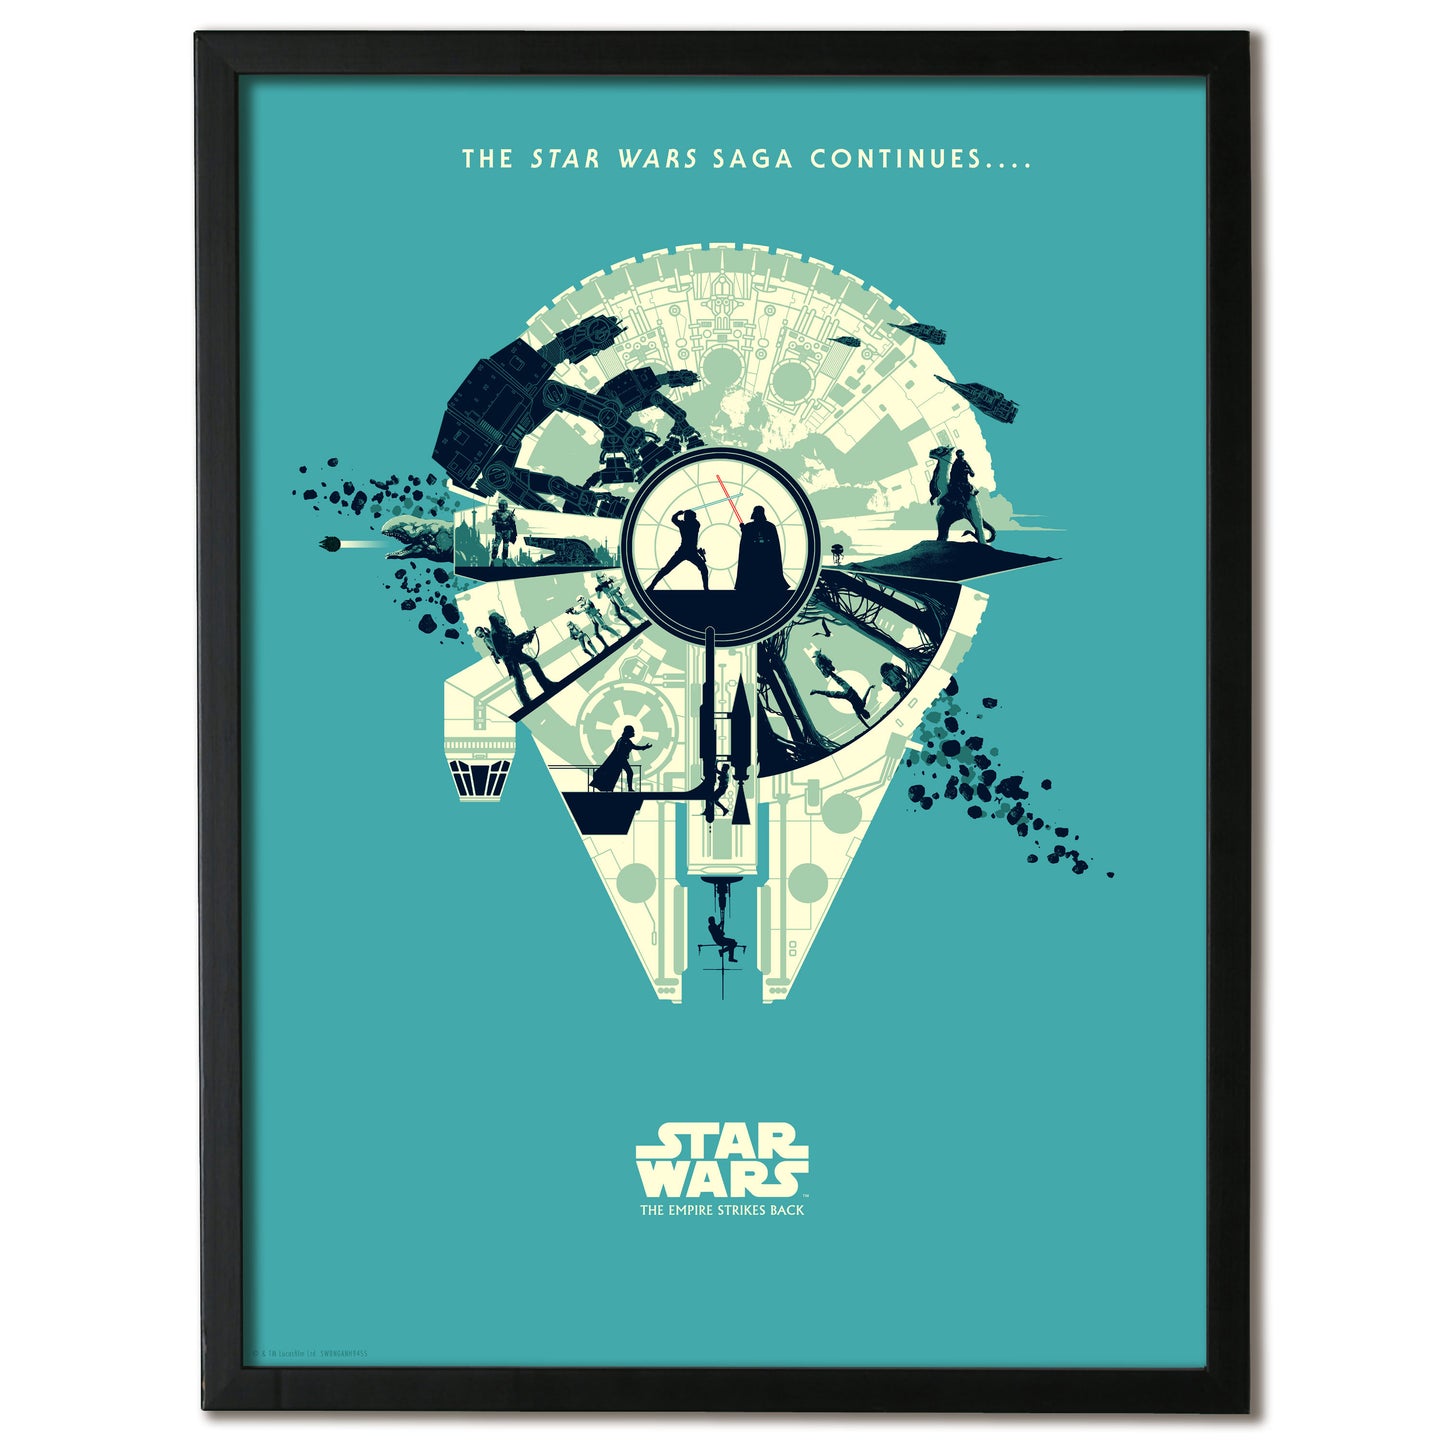 Matt Ferguson "Star Wars Trilogy" Timed Edition SET + FREE PIN!